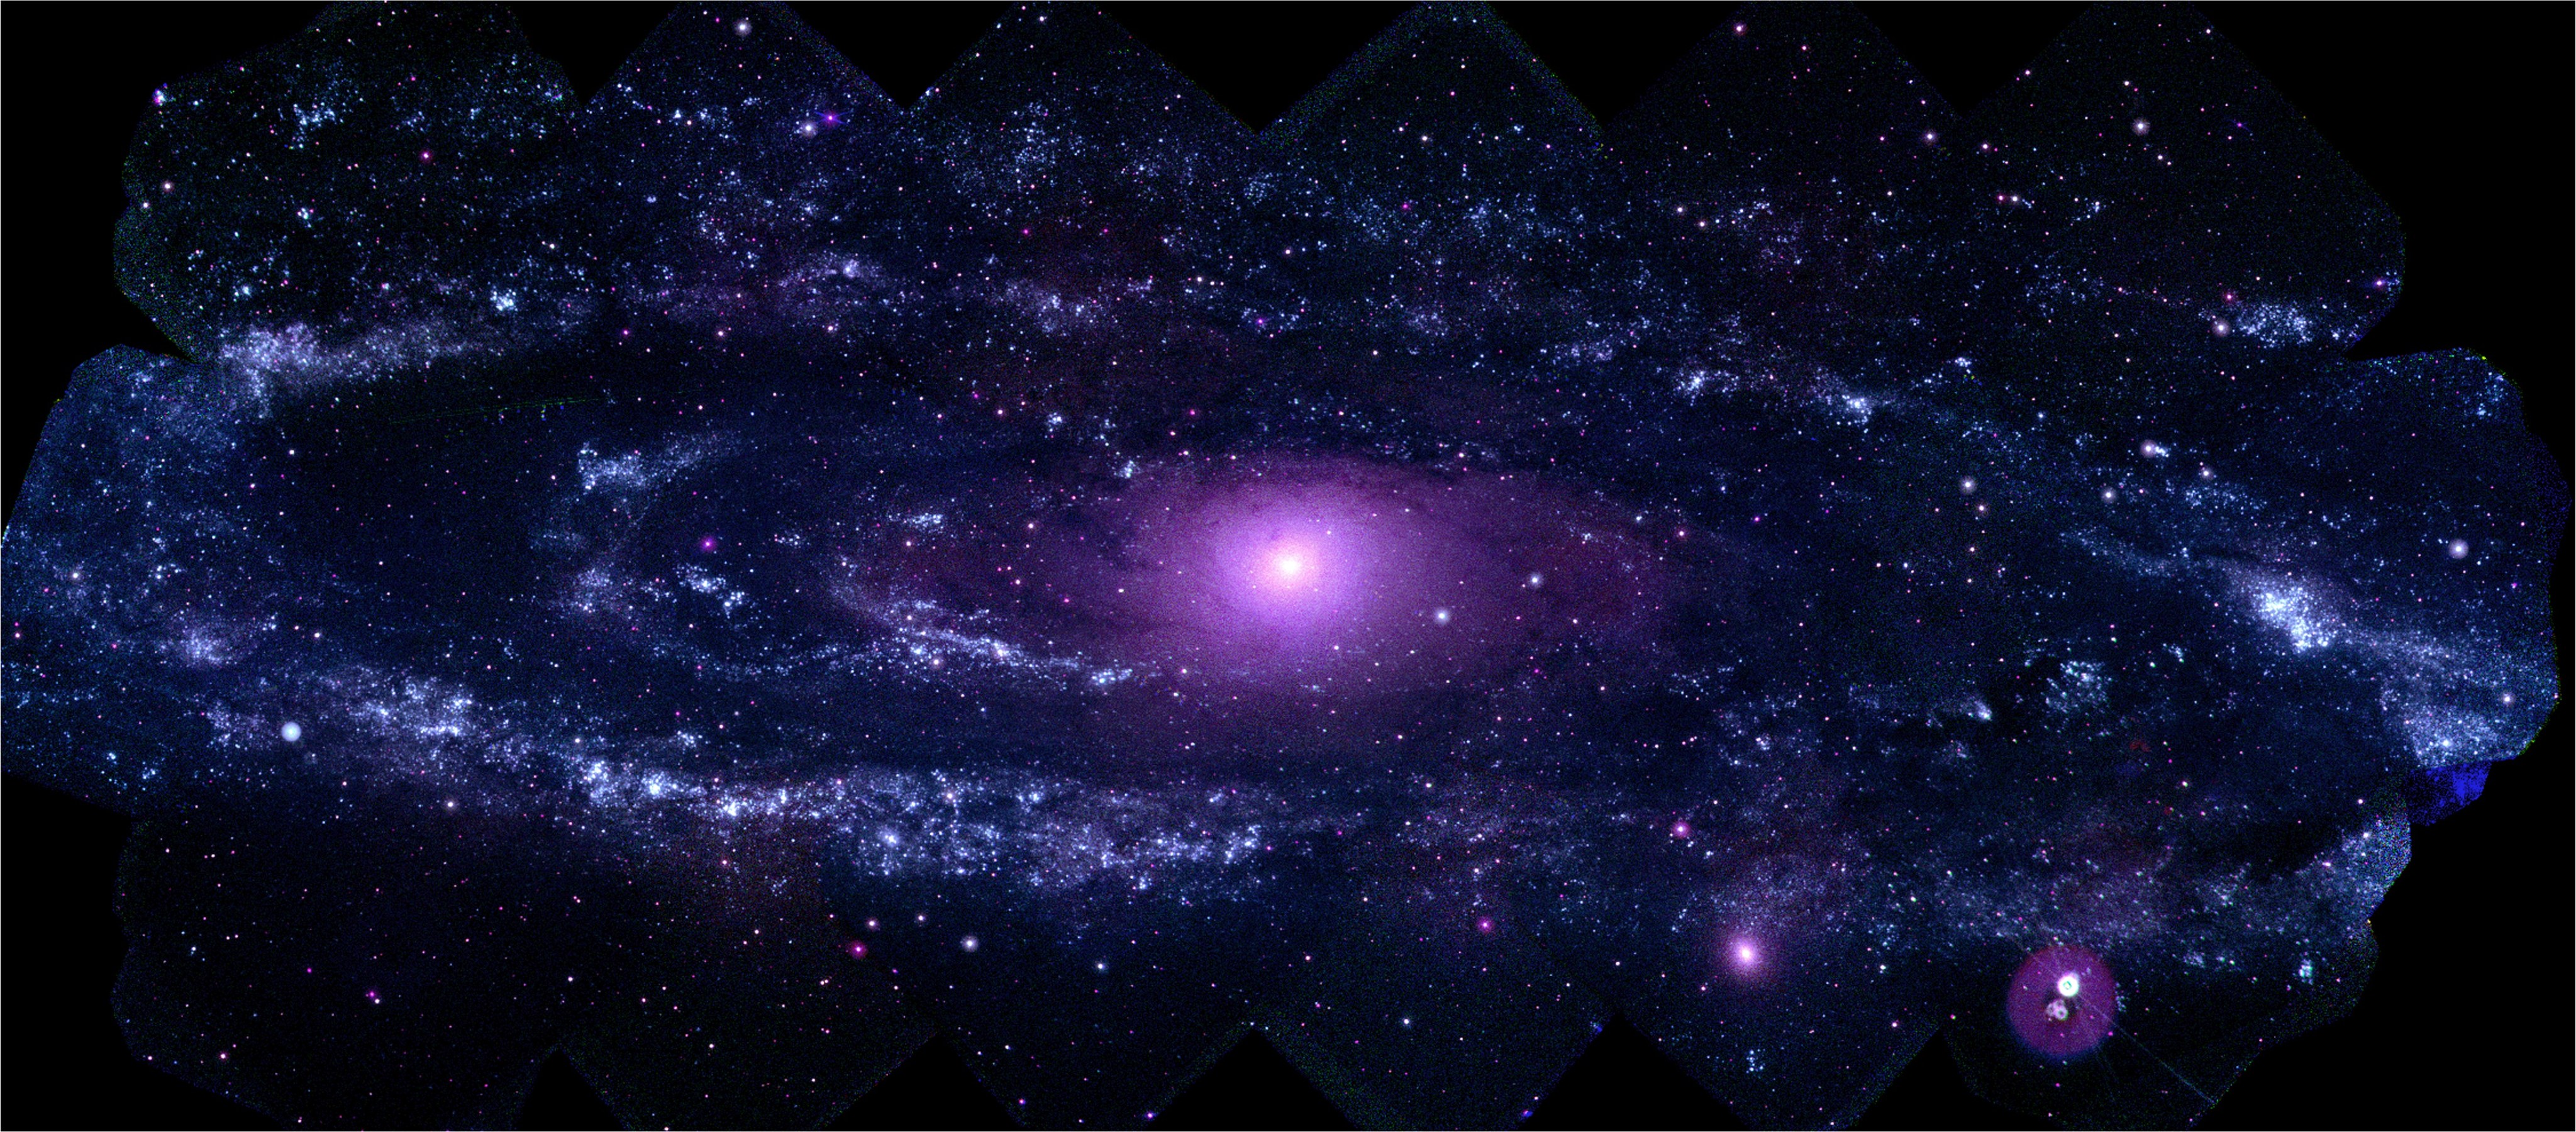 Swift's UV Portrait of the Andromeda Galaxy